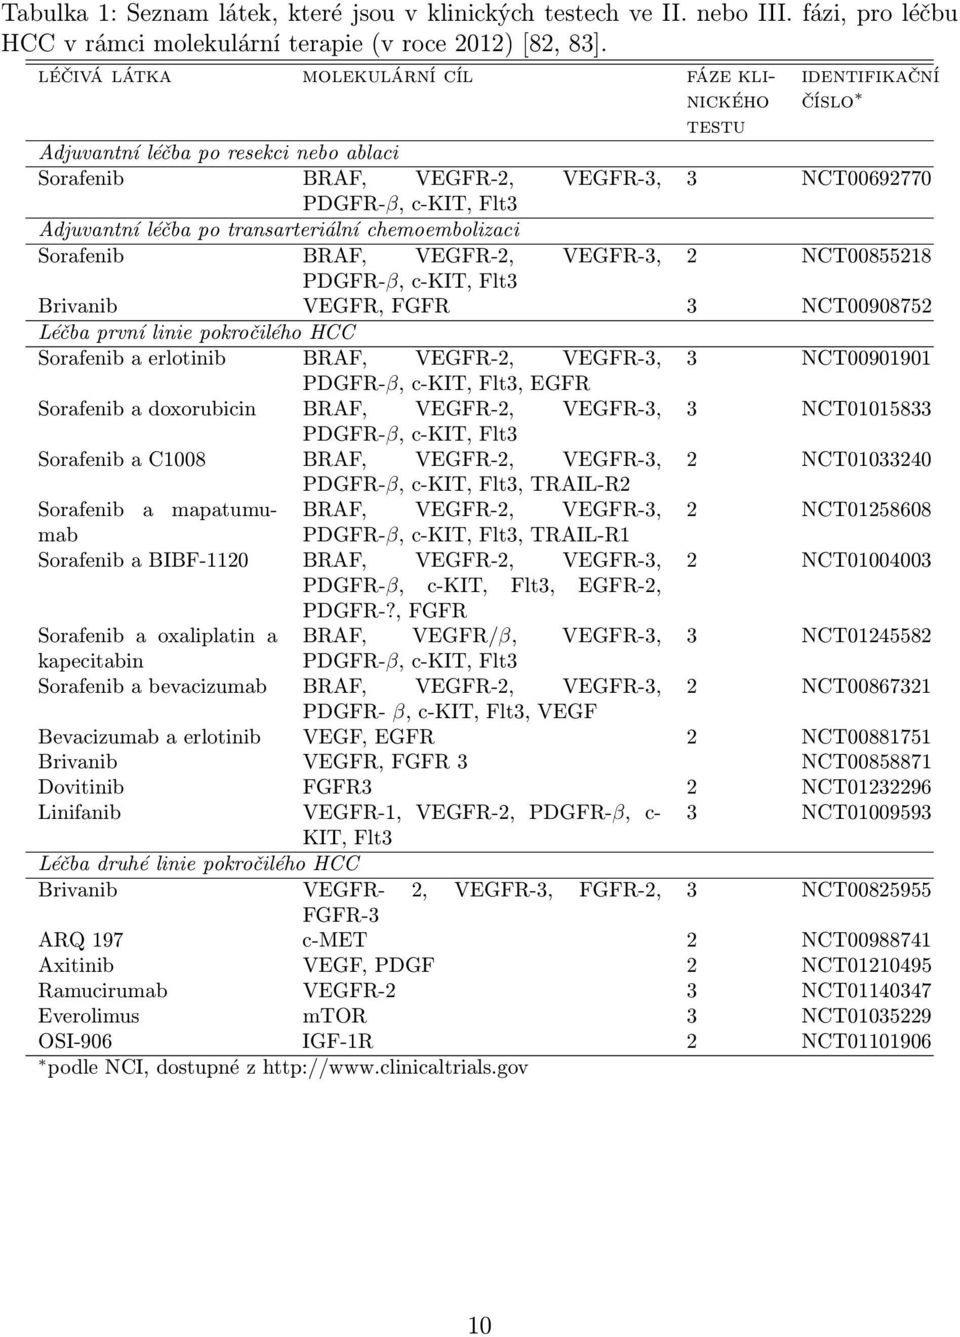 transarteriální chemoembolizaci Sorafenib BRAF, VEGFR-2, VEGFR-3, 2 NCT00855218 PDGFR-β, c-kit, Flt3 Brivanib VEGFR, FGFR 3 NCT00908752 Léčba první linie pokročilého HCC Sorafenib a erlotinib BRAF,